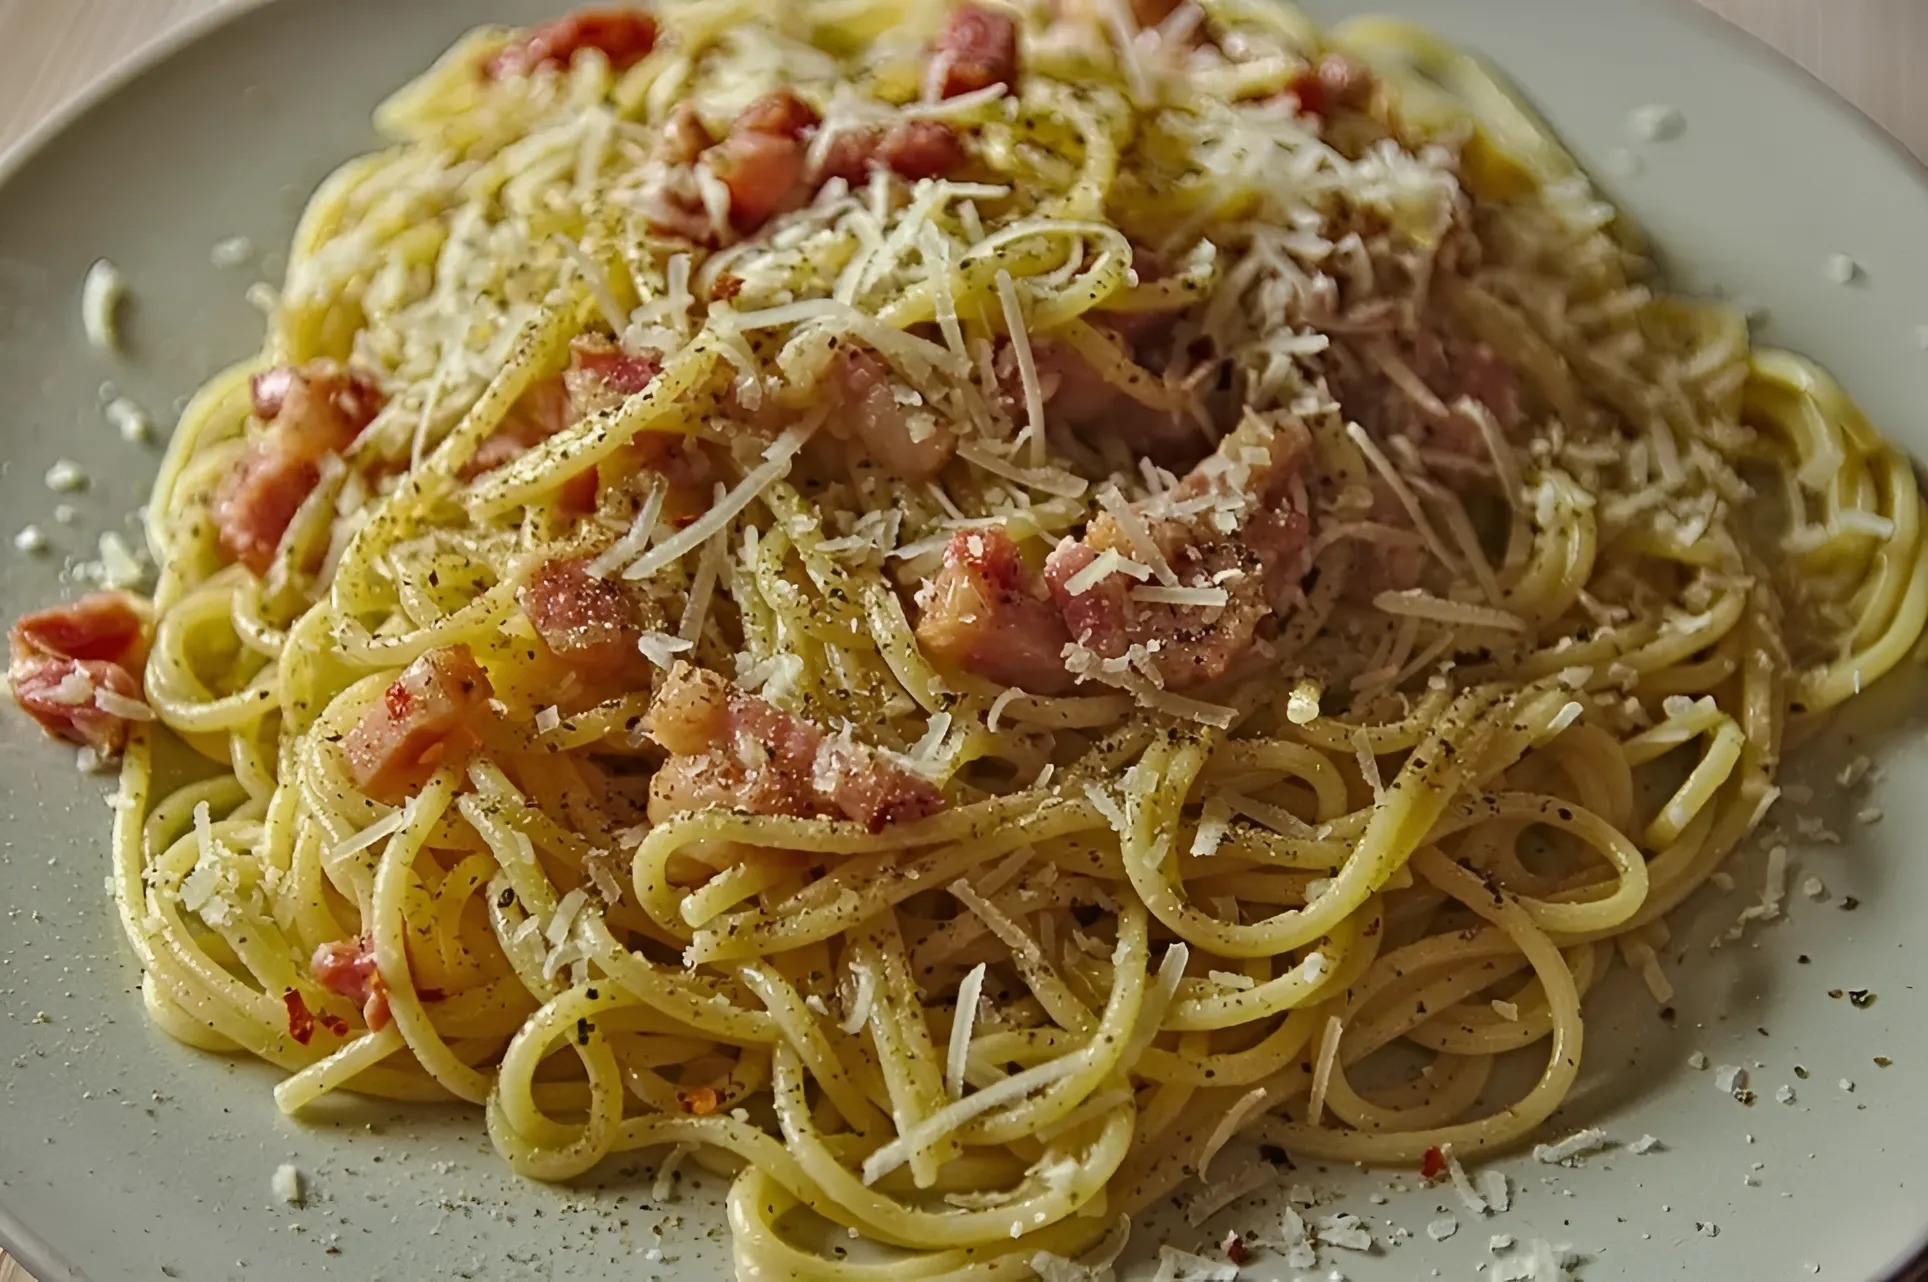 Featured image for “Pasta alla gricia”